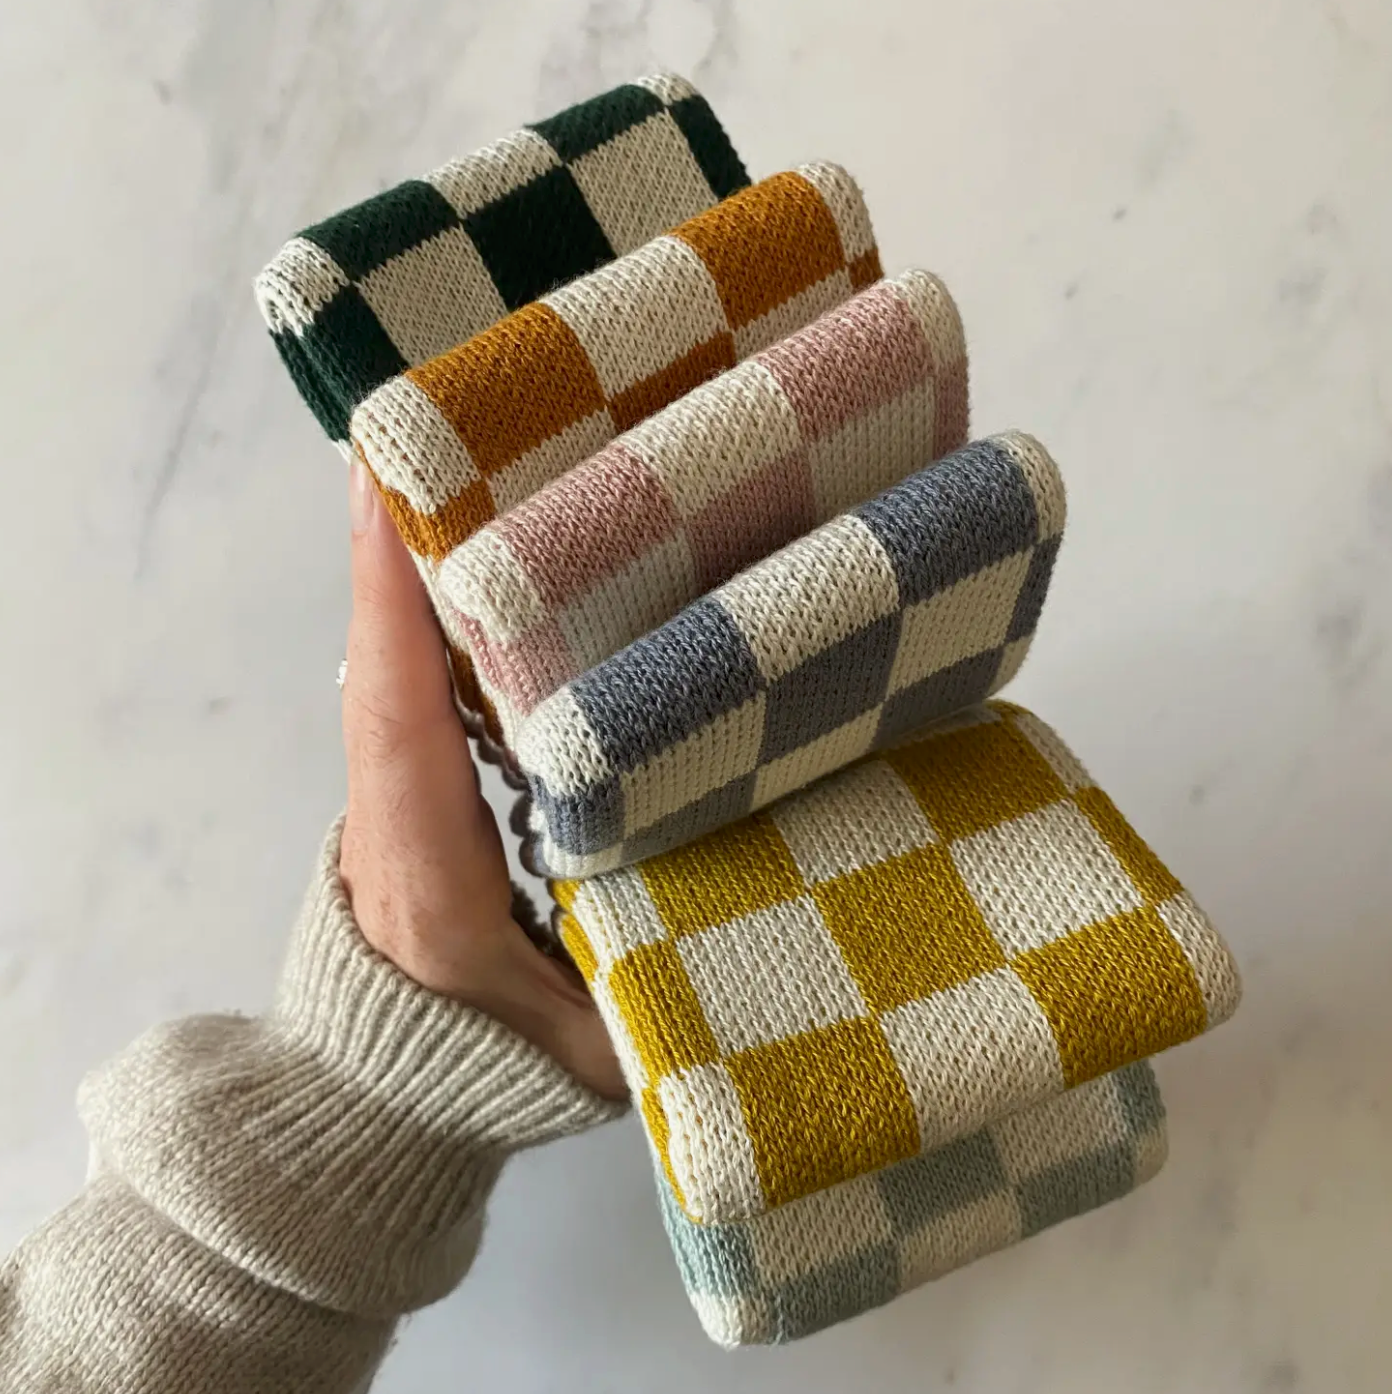 Reusable & Eco-Friendly Cotton Knit Dishcloths (3) - Blush, Terracotta, Black